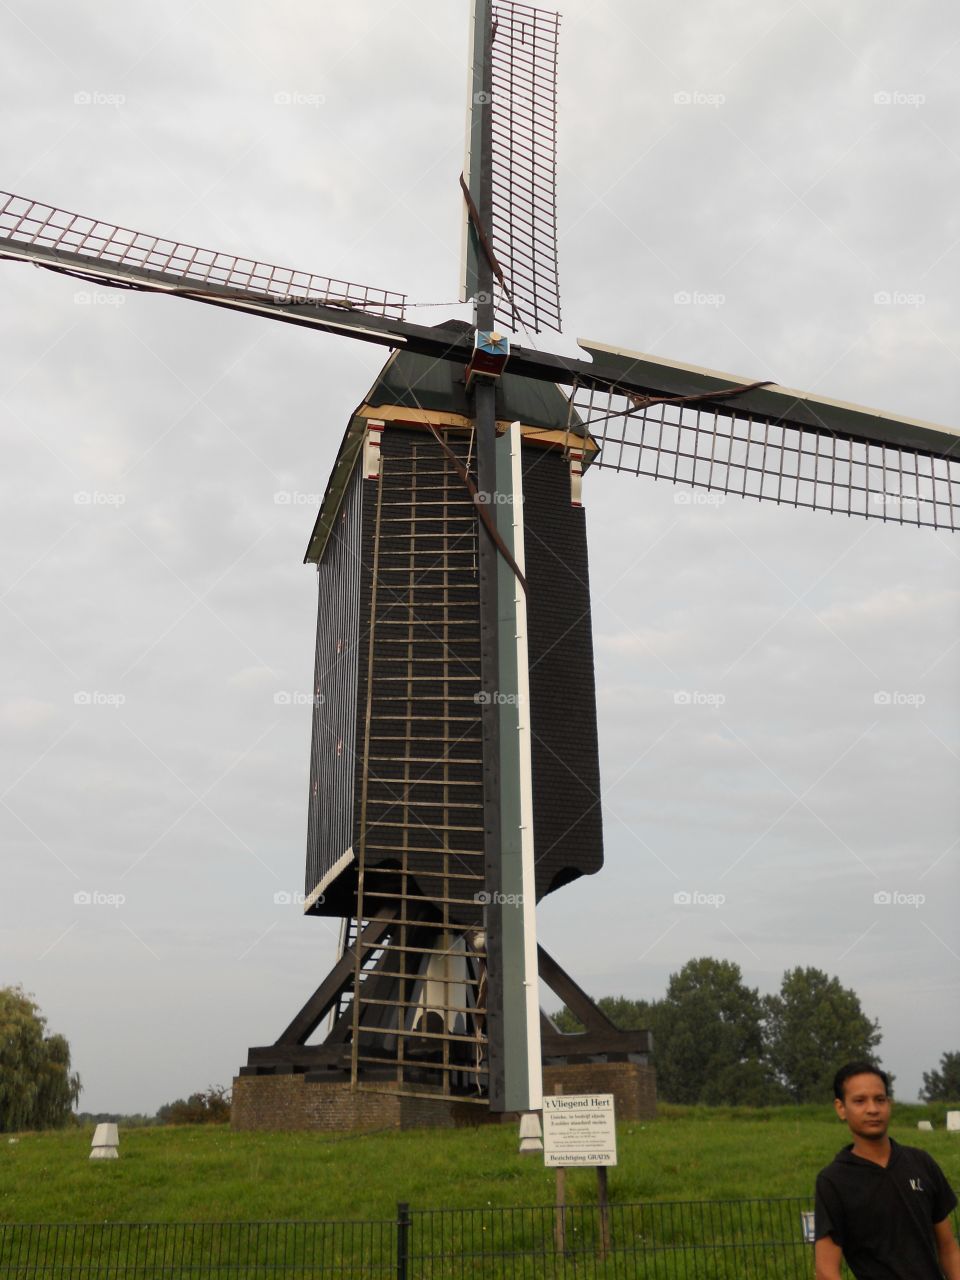 # Windmill# power generator# Holland# Rotterdam# Outdoor# greenery#